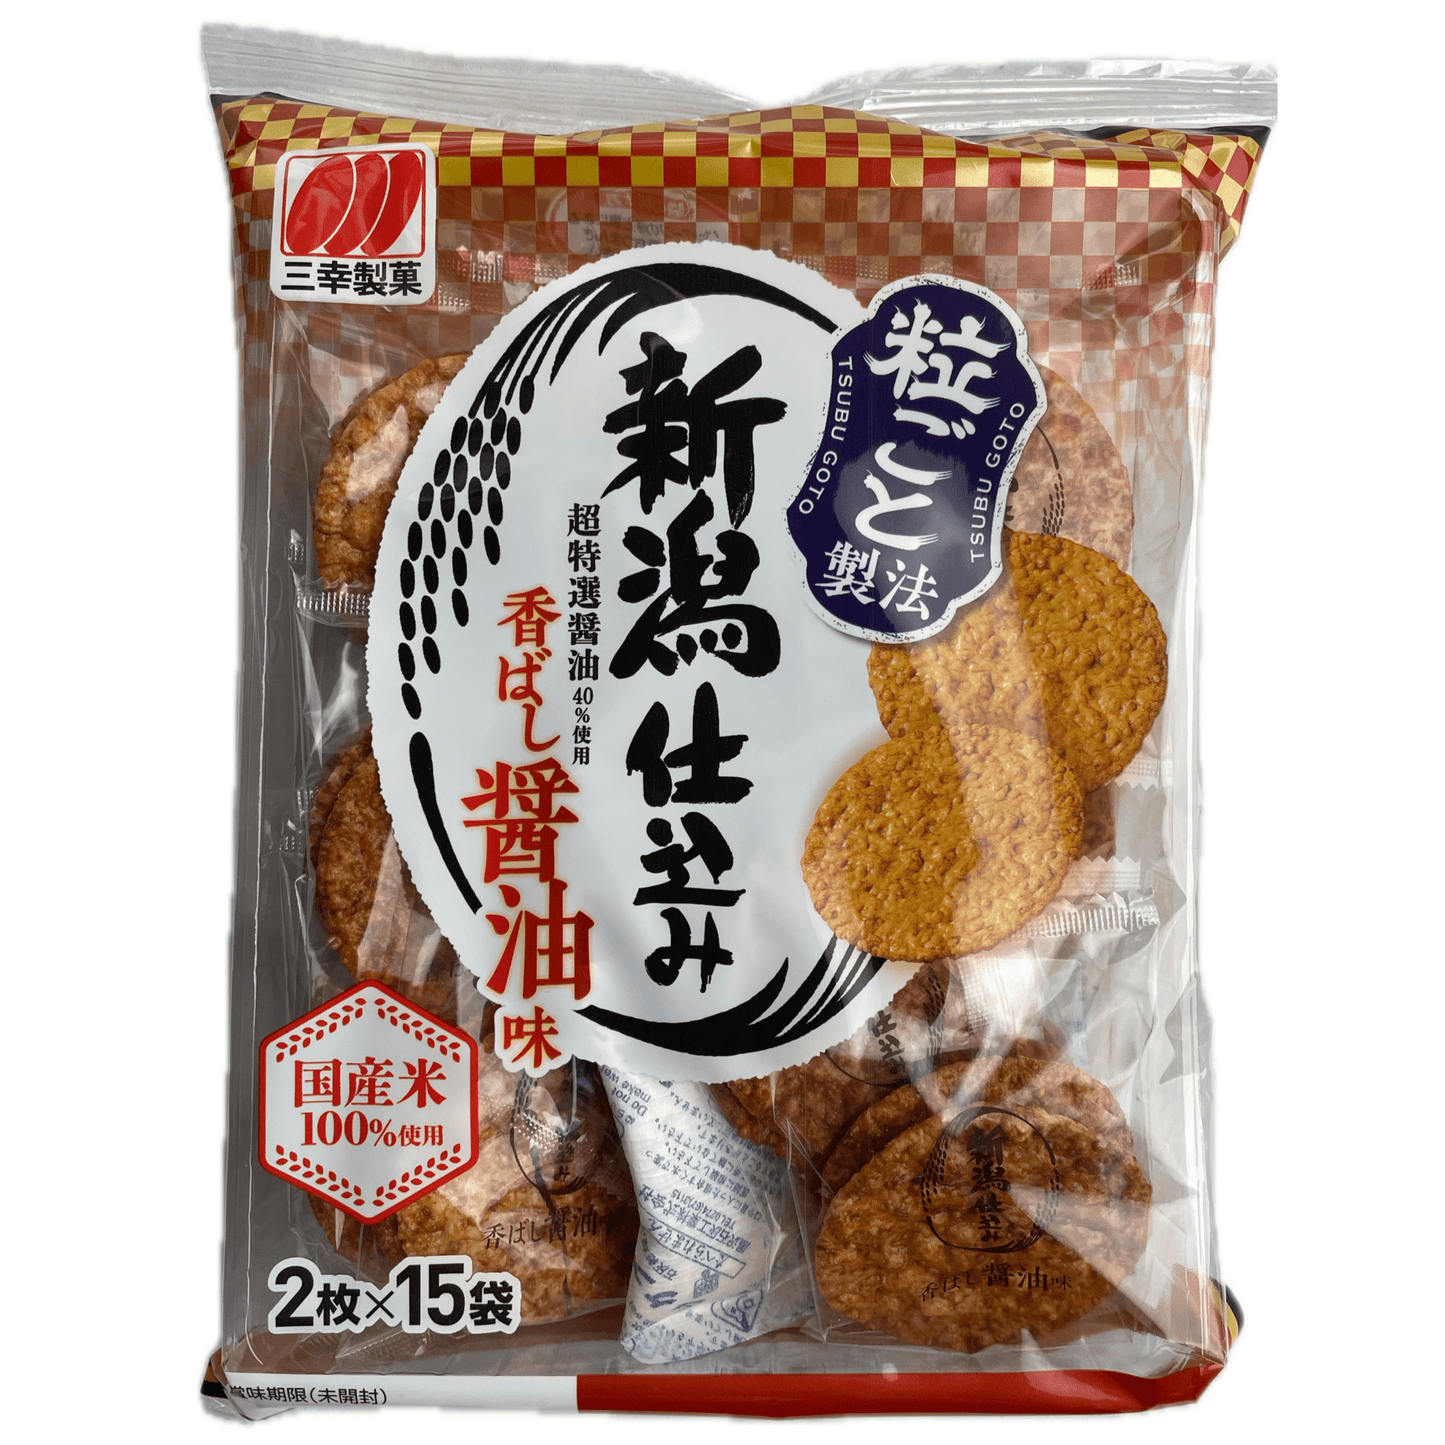 Sanko NiigataJikomi Rice Cracker Soy Sauce 30pcs / 三幸 新潟仕込み 香ばし醤油味 30枚 - RiceWineShop